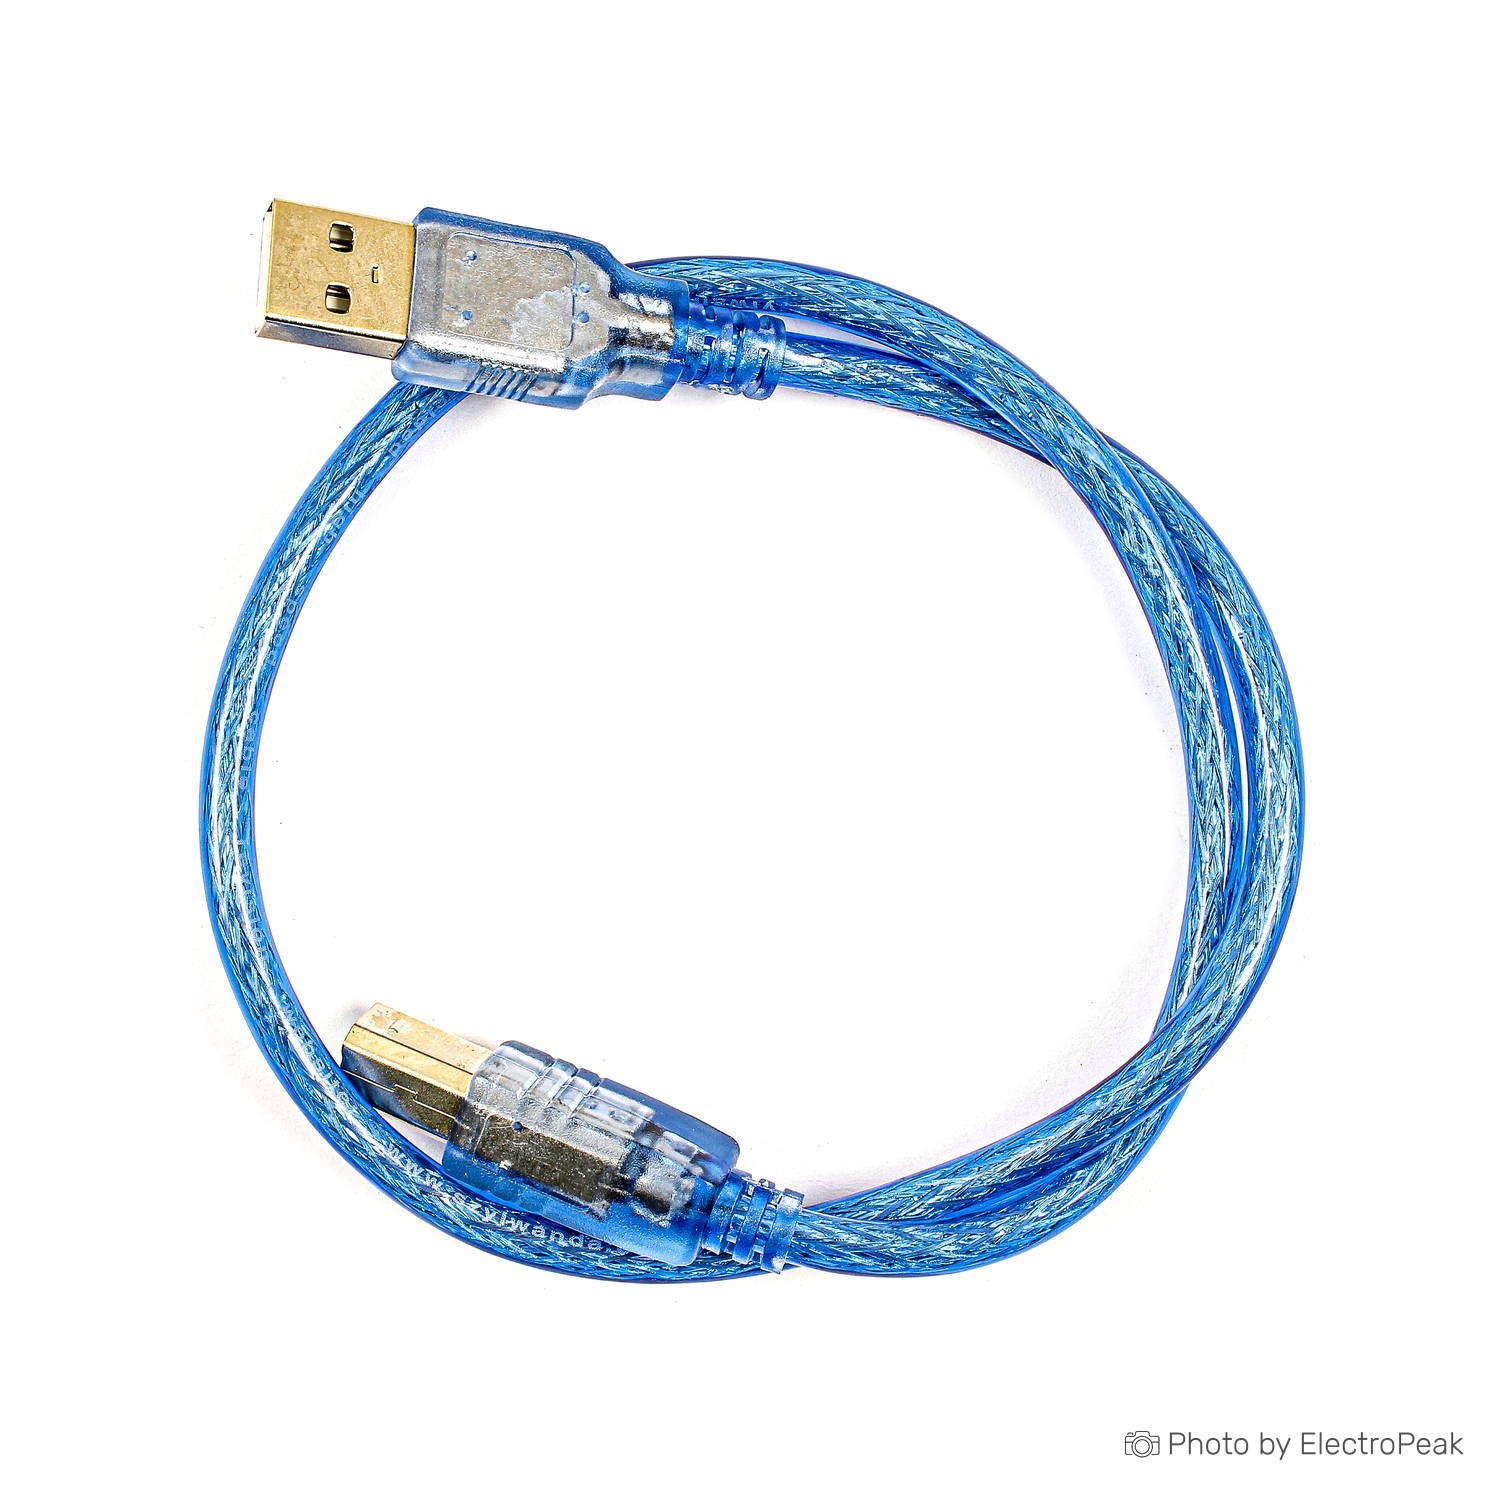 Cable Arduino UNO/Mega de 50 cm tipo USB-A a USB-B